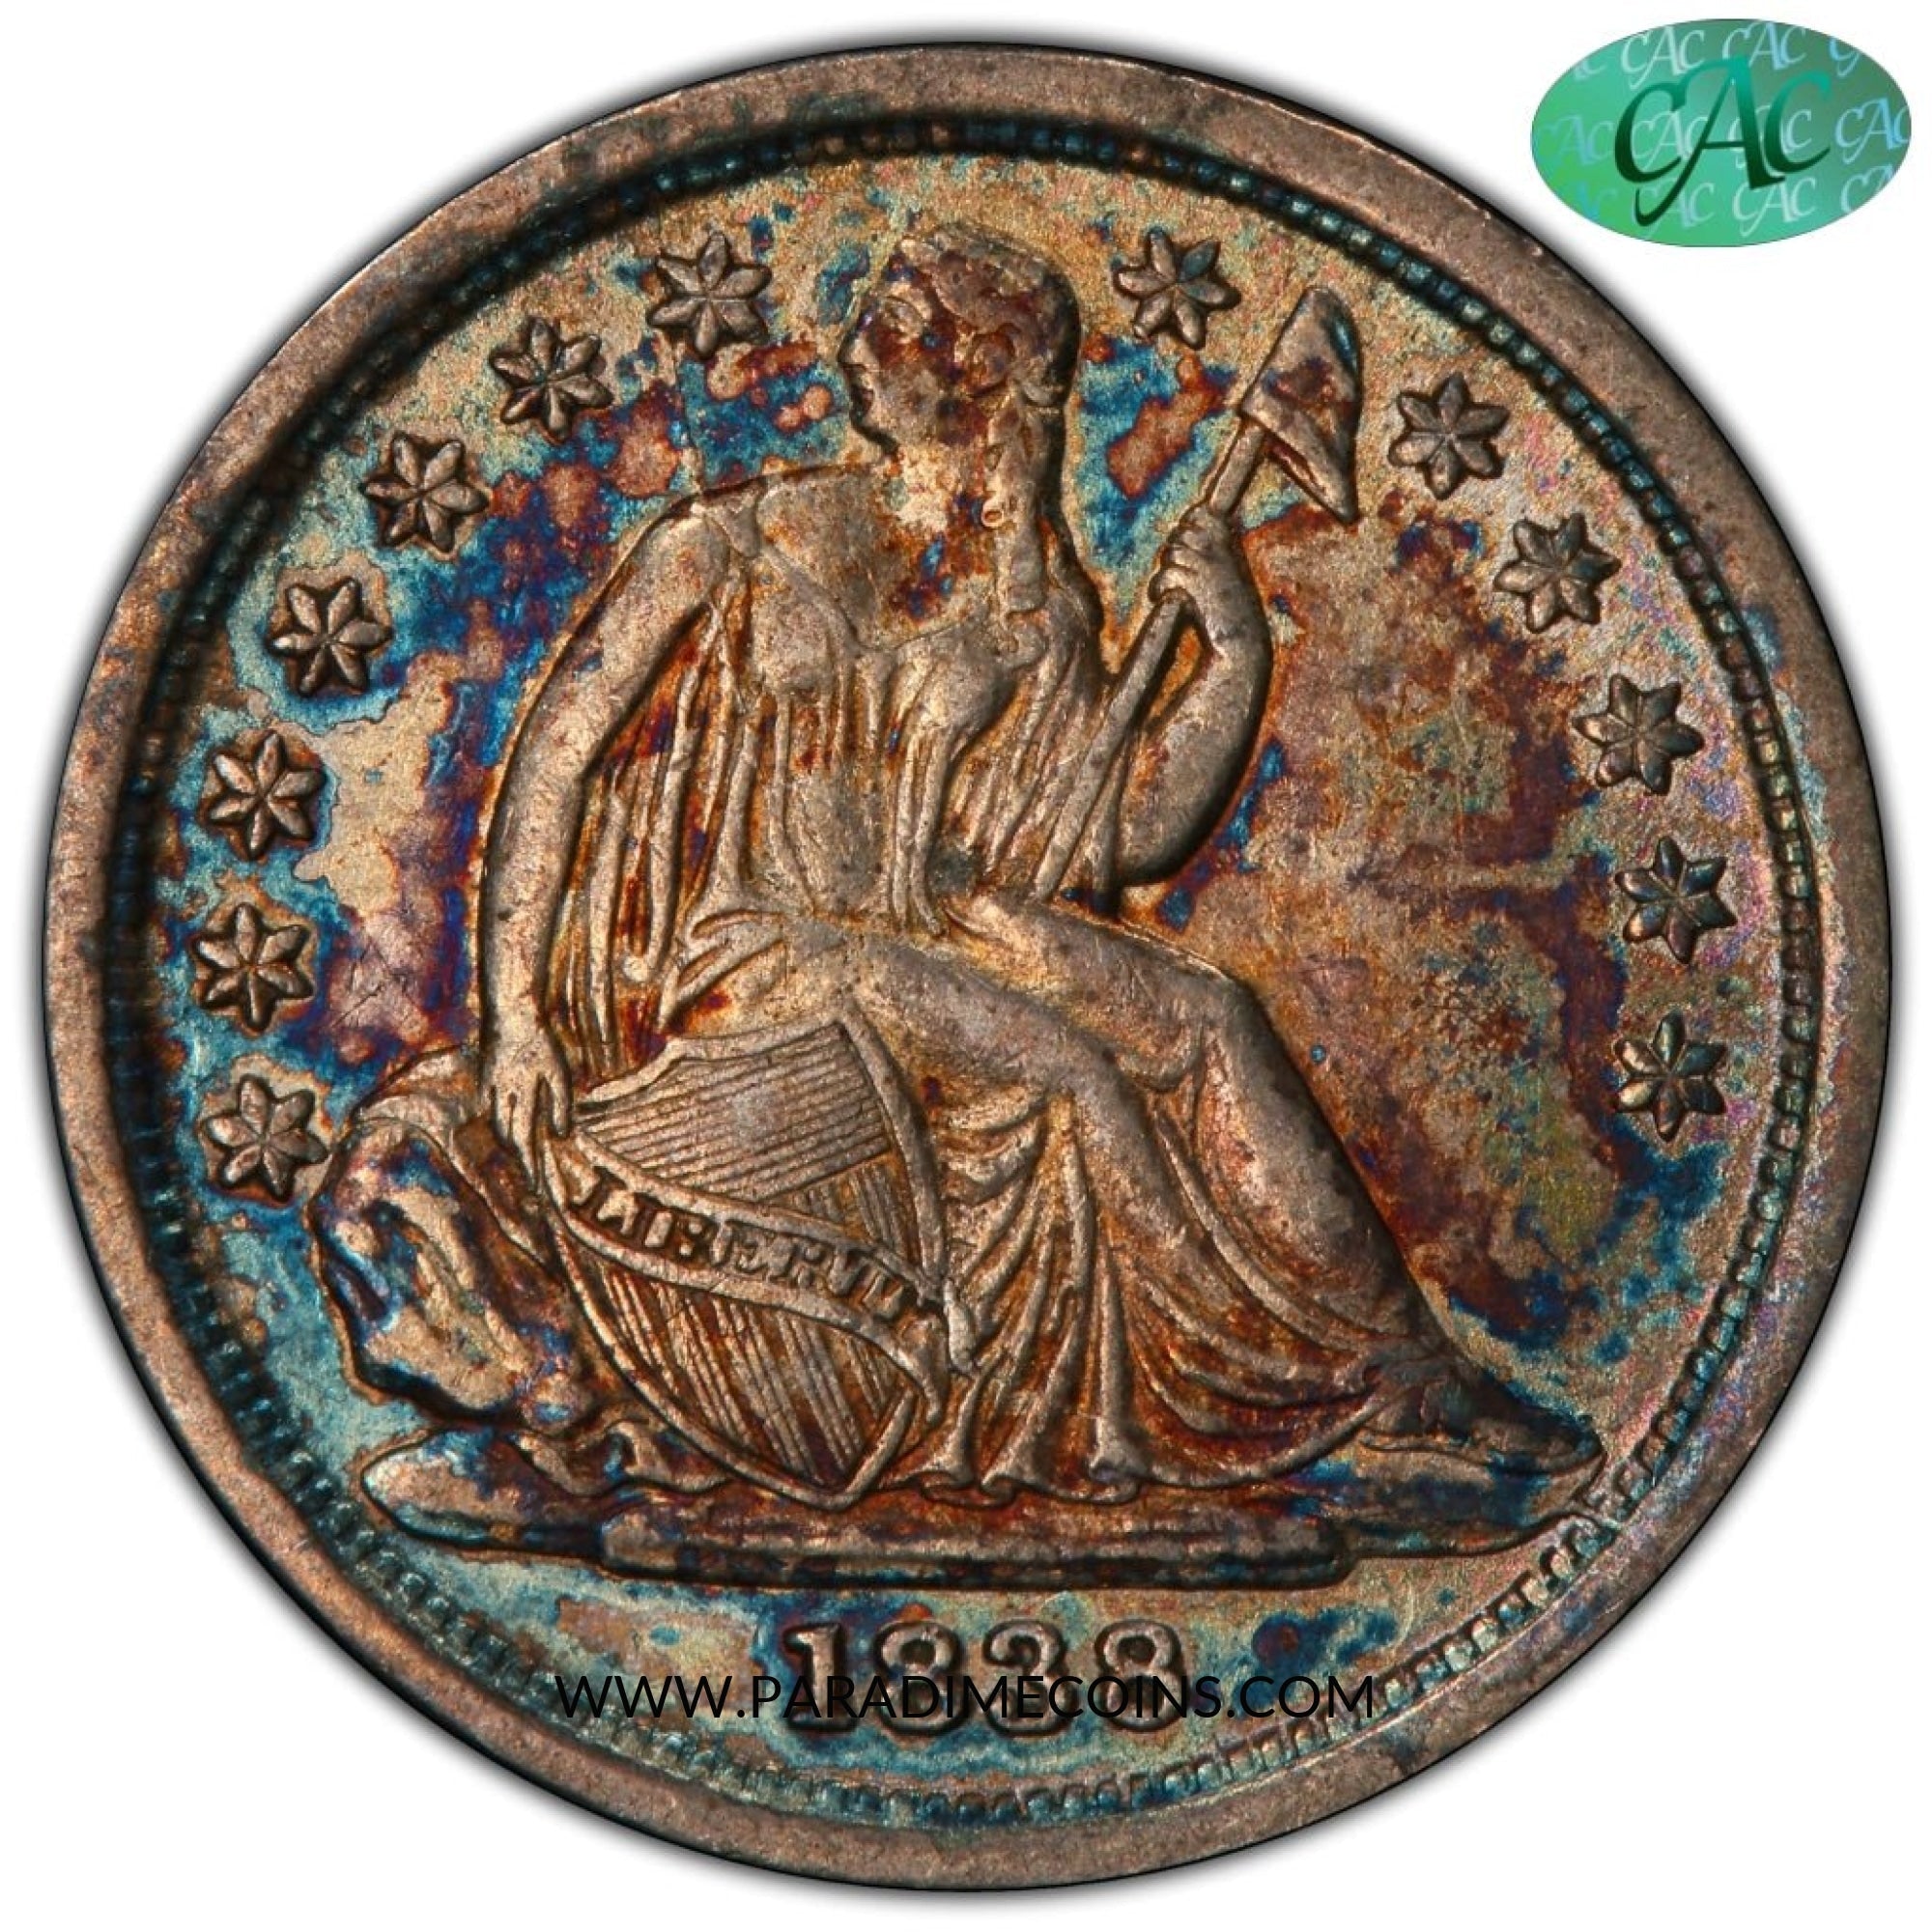 1838 10C NO DRAPERY LARGE STARS AU55 PCGS CAC - Paradime Coins | PCGS NGC CACG CAC Rare US Numismatic Coins For Sale